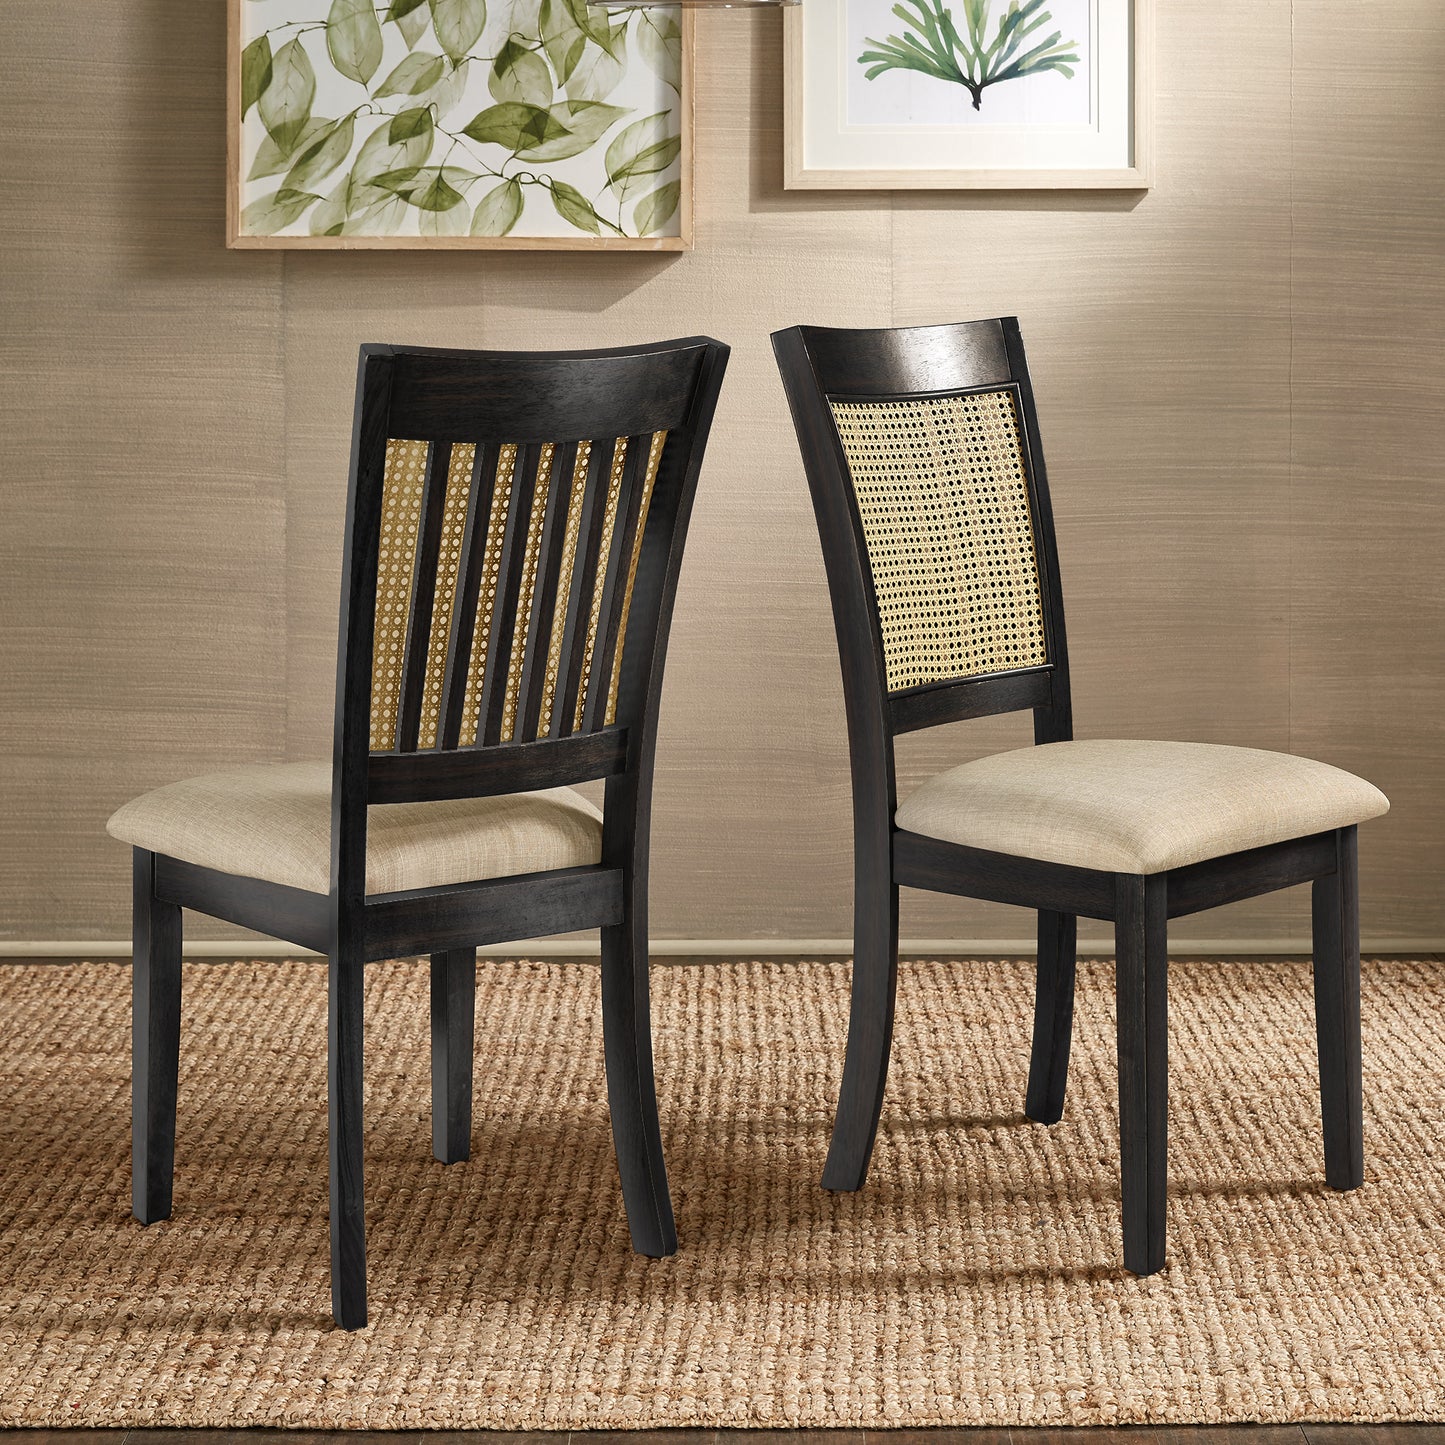 Cane Accent Dining - Slat Back Chair (Set of 2), Antique Black Finish, Beige Linen